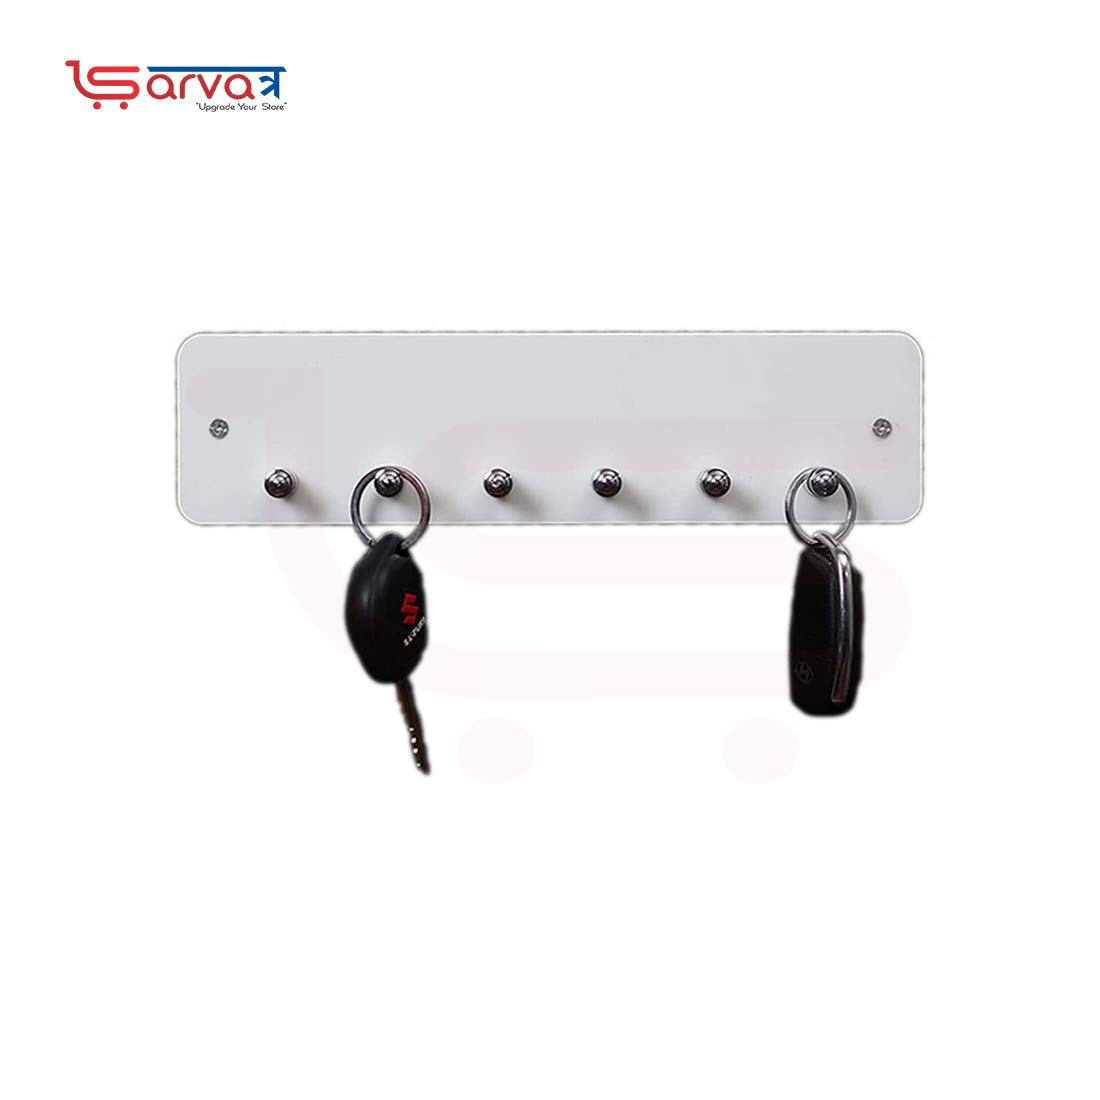 Sarvatr Premium Acrylic Wall Mounted Key Holder/Acrylic Key Rack